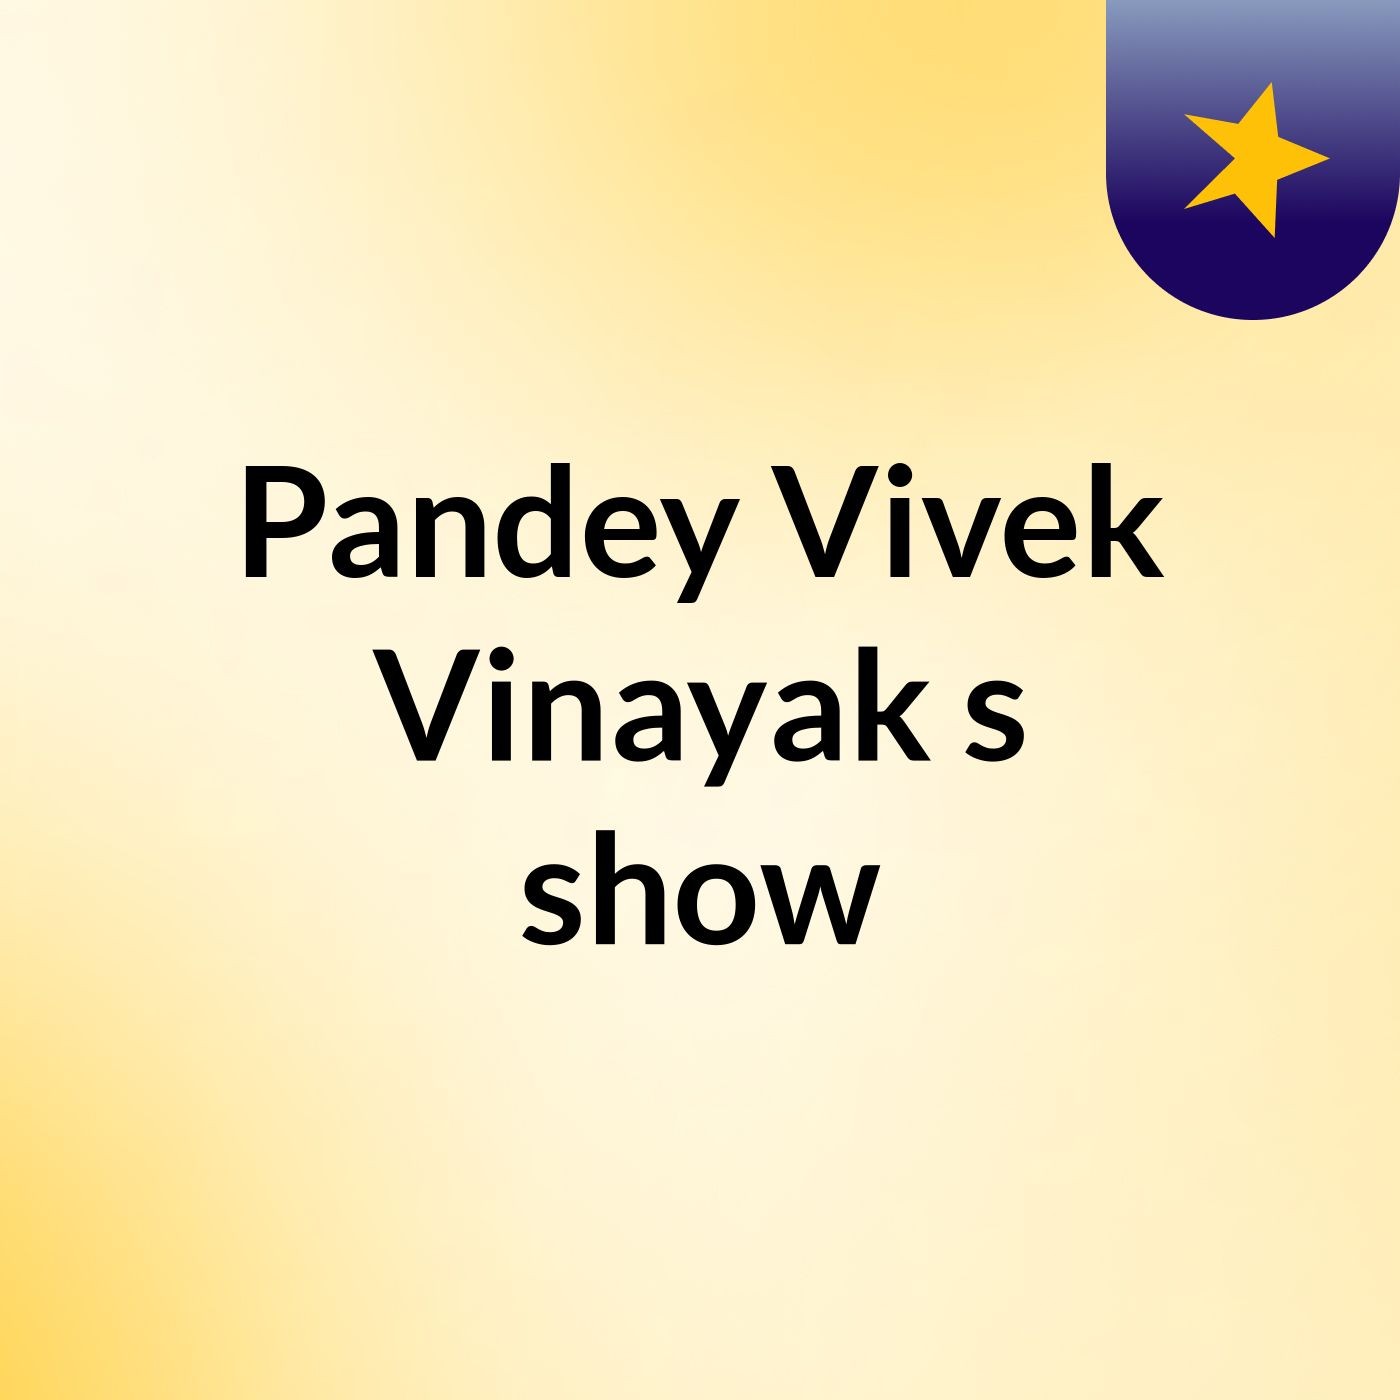 Pandey Vivek Vinayak's show